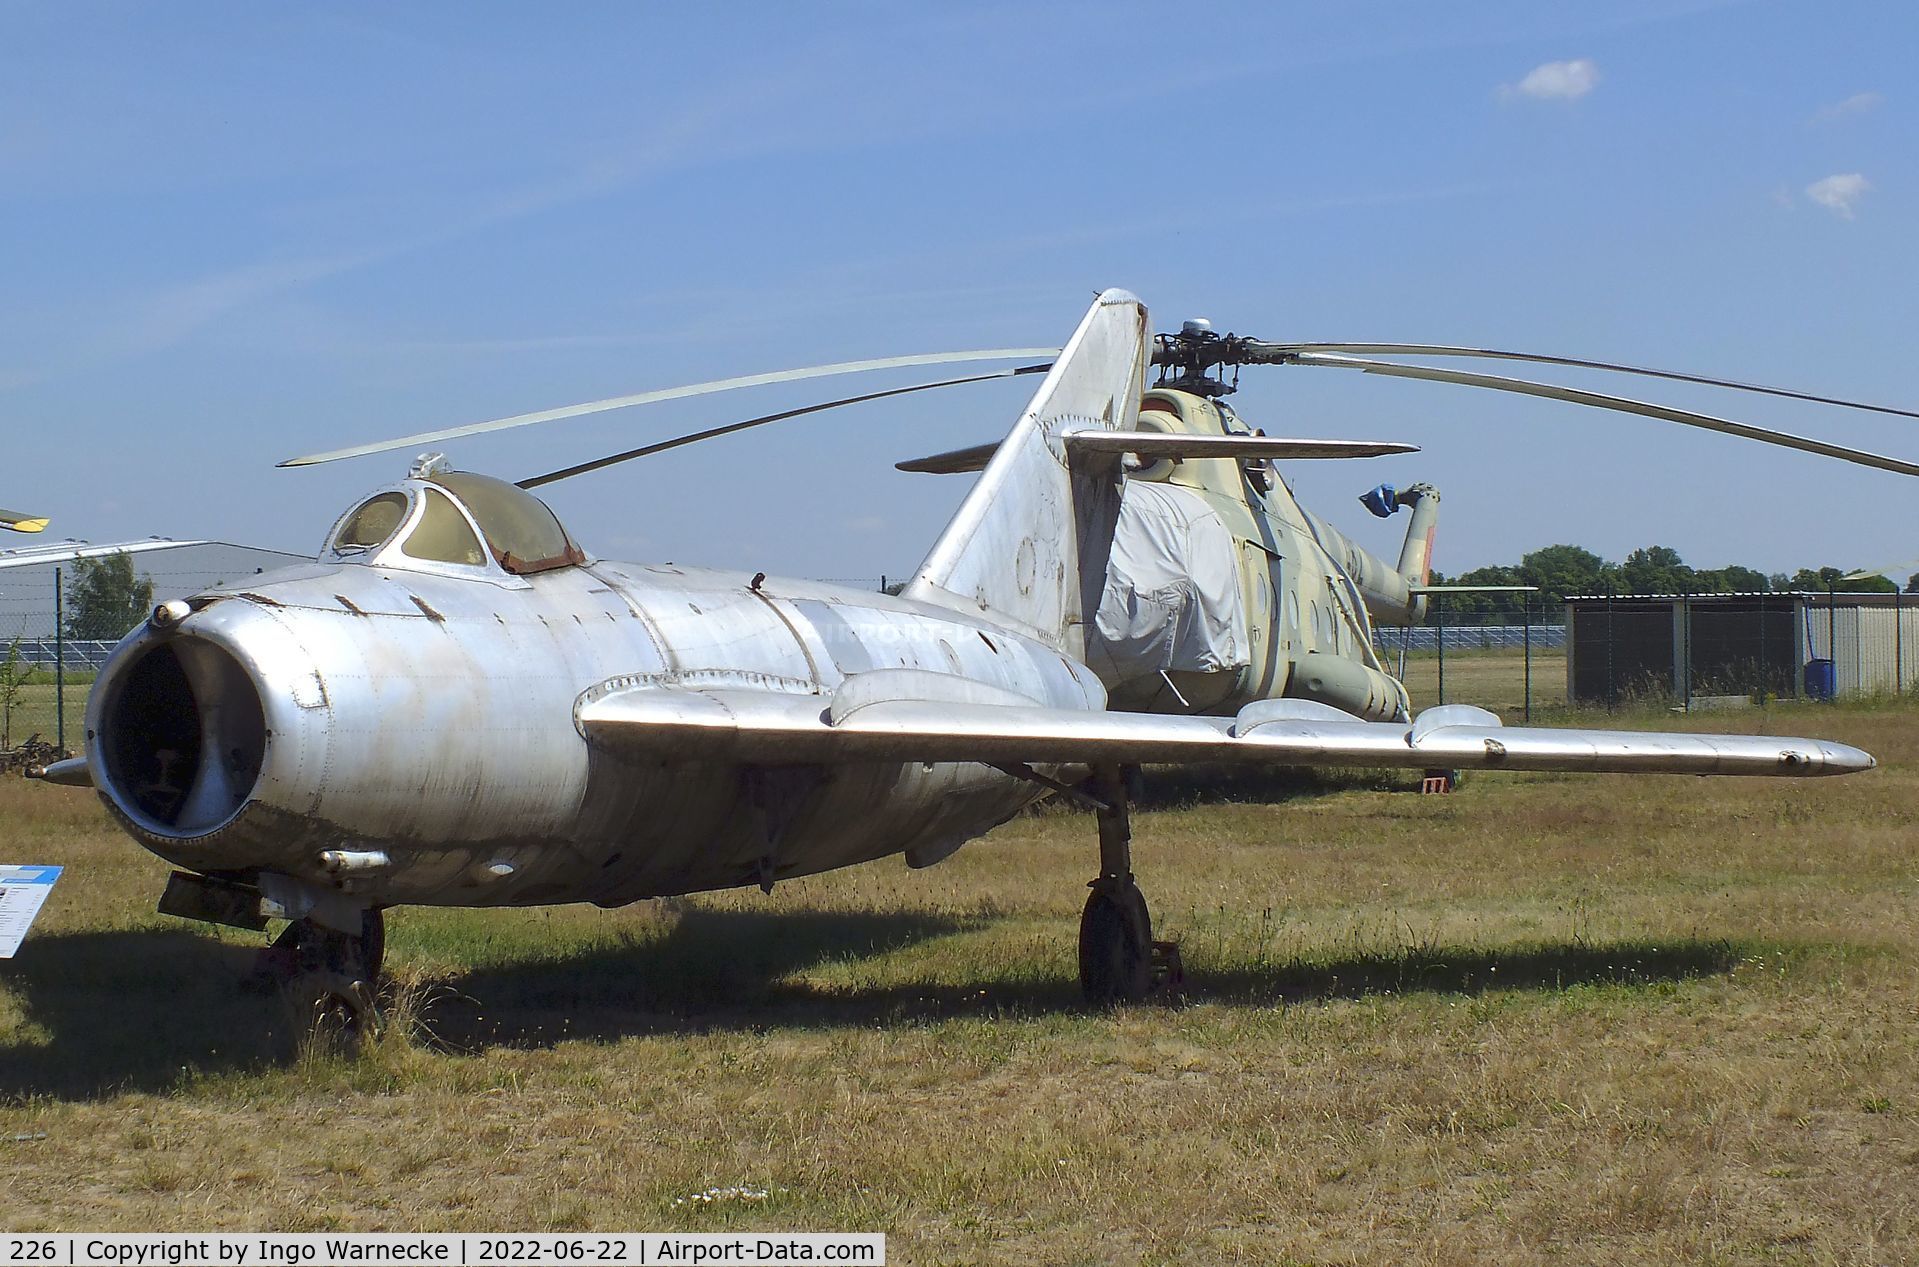 226, Mikoyan-Gurevich MiG-17 C/N 54211684, Mikoyan i Gurevich MiG-17 FRESCO-A at the Flugplatzmuseum Cottbus (Cottbus airfield museum)